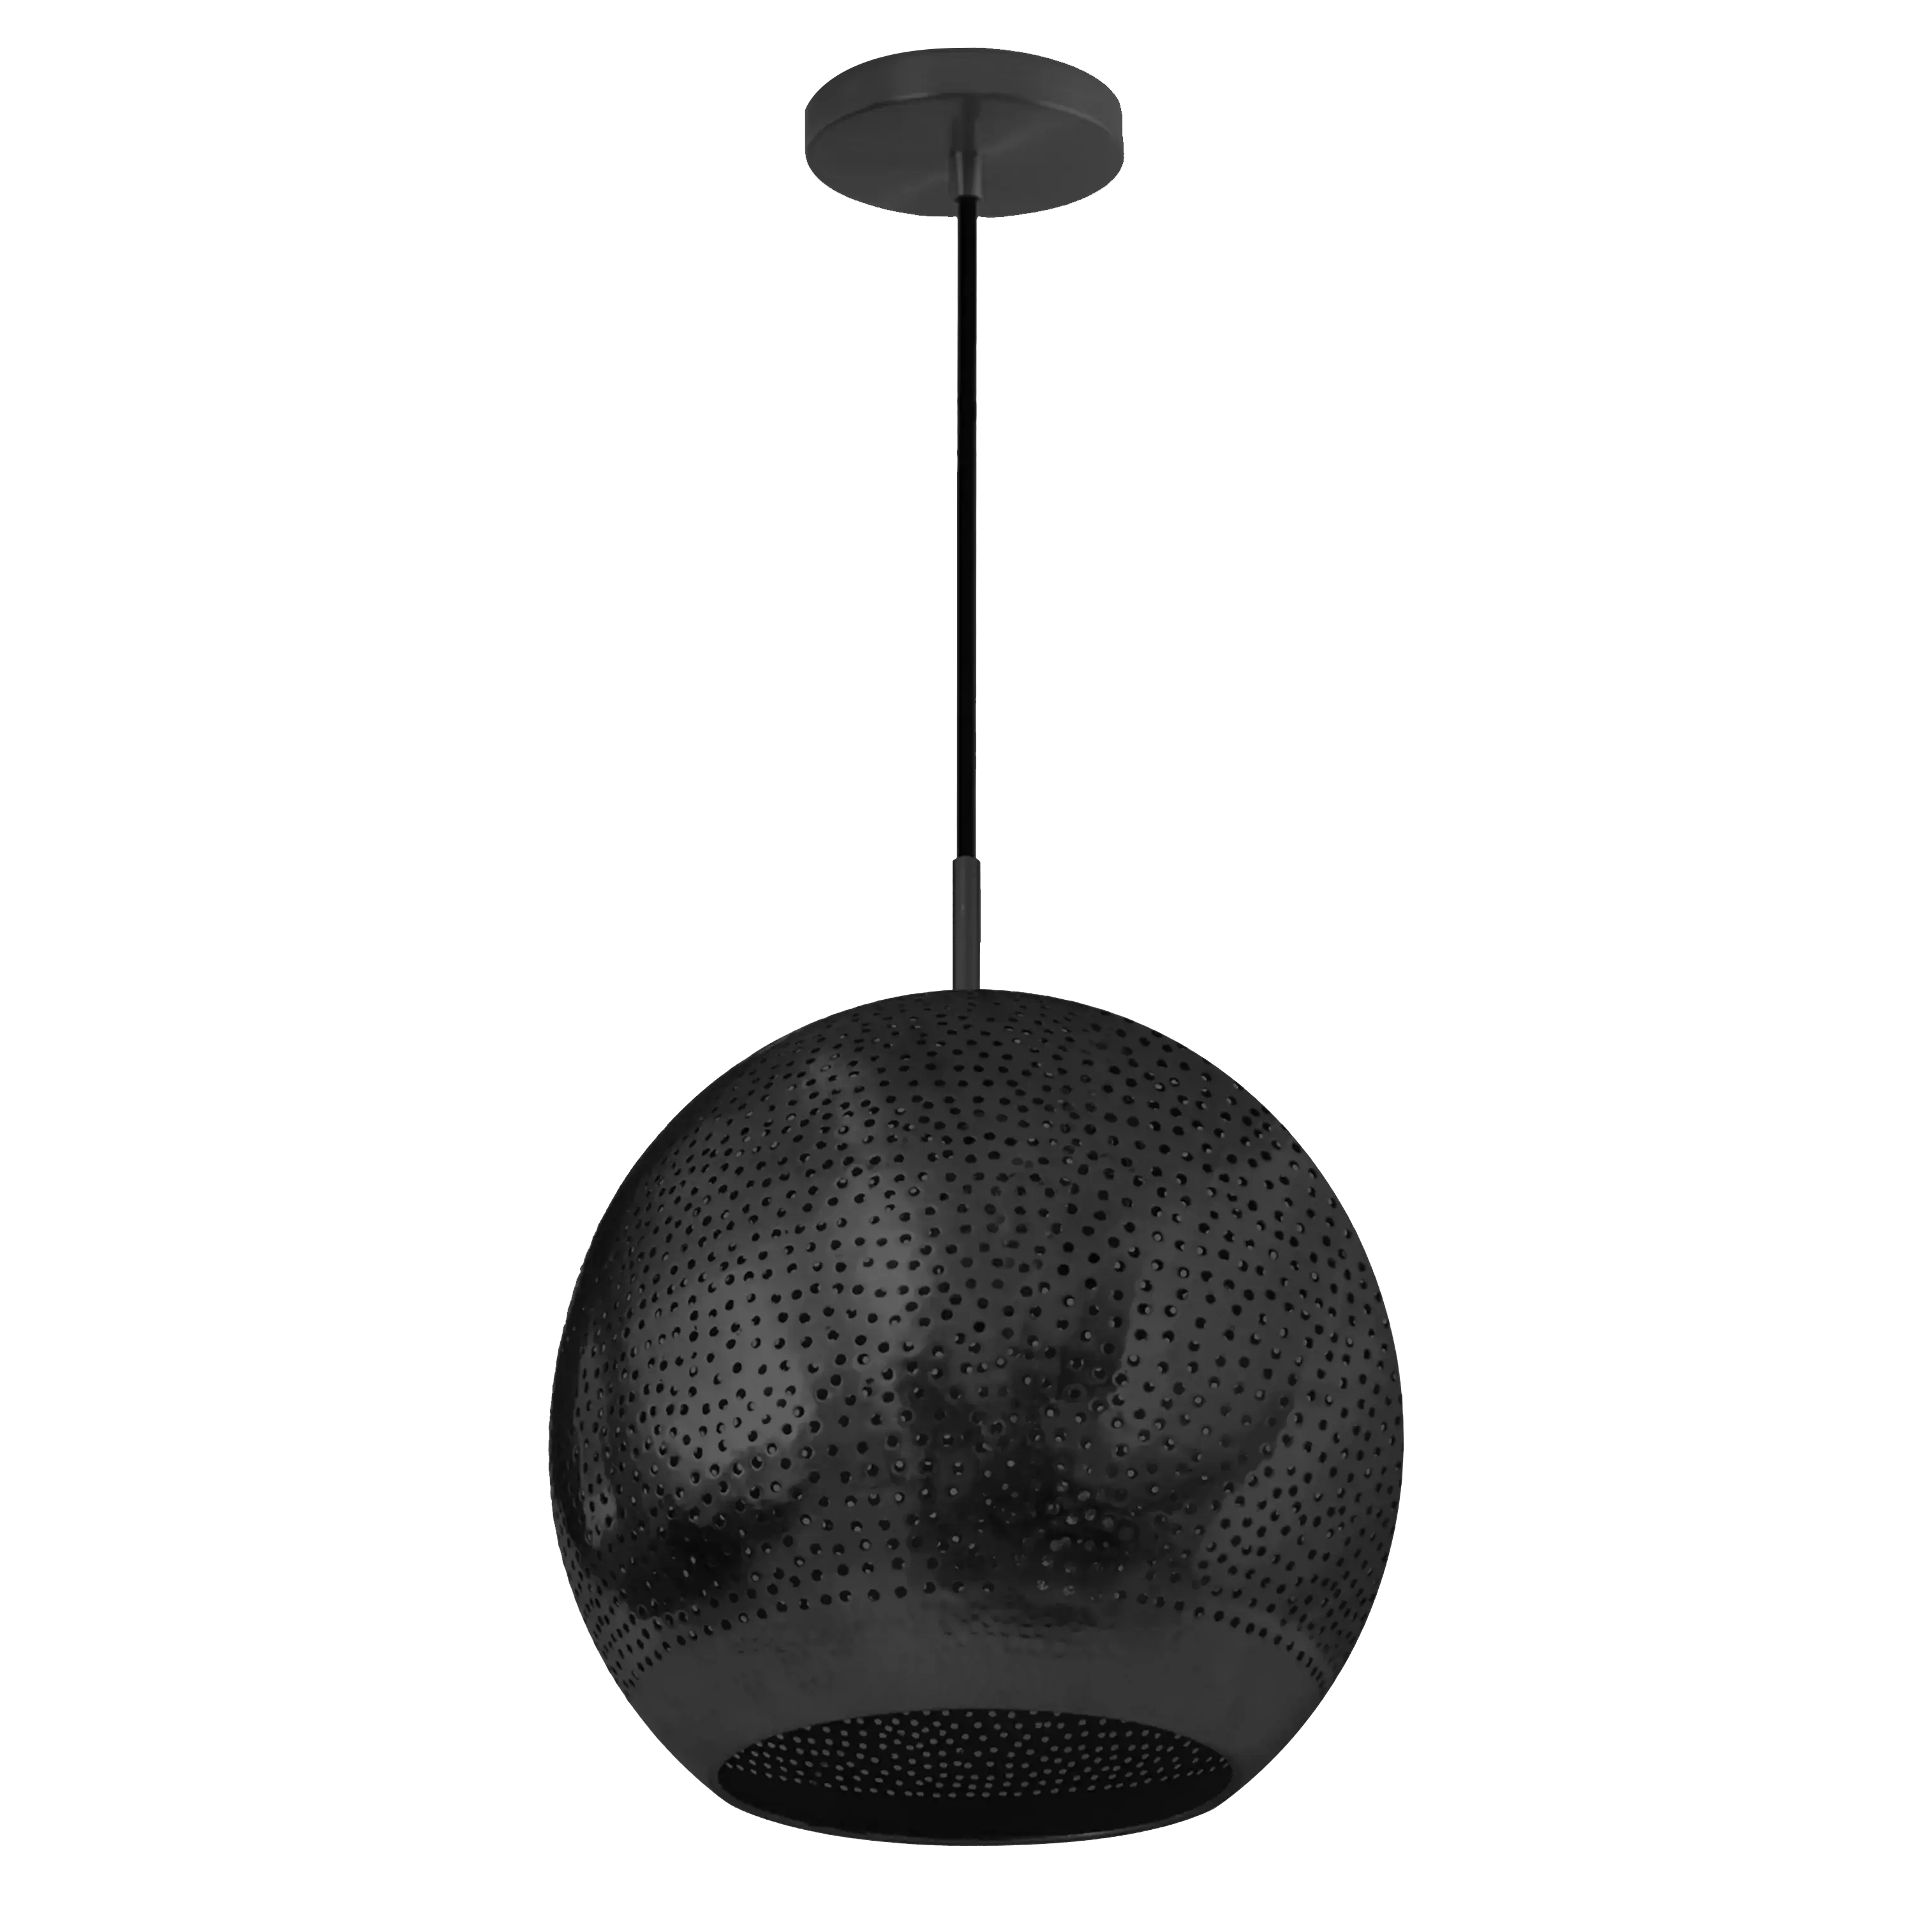 Dounia home Pendant light in black  made of Metal, Model: Shams